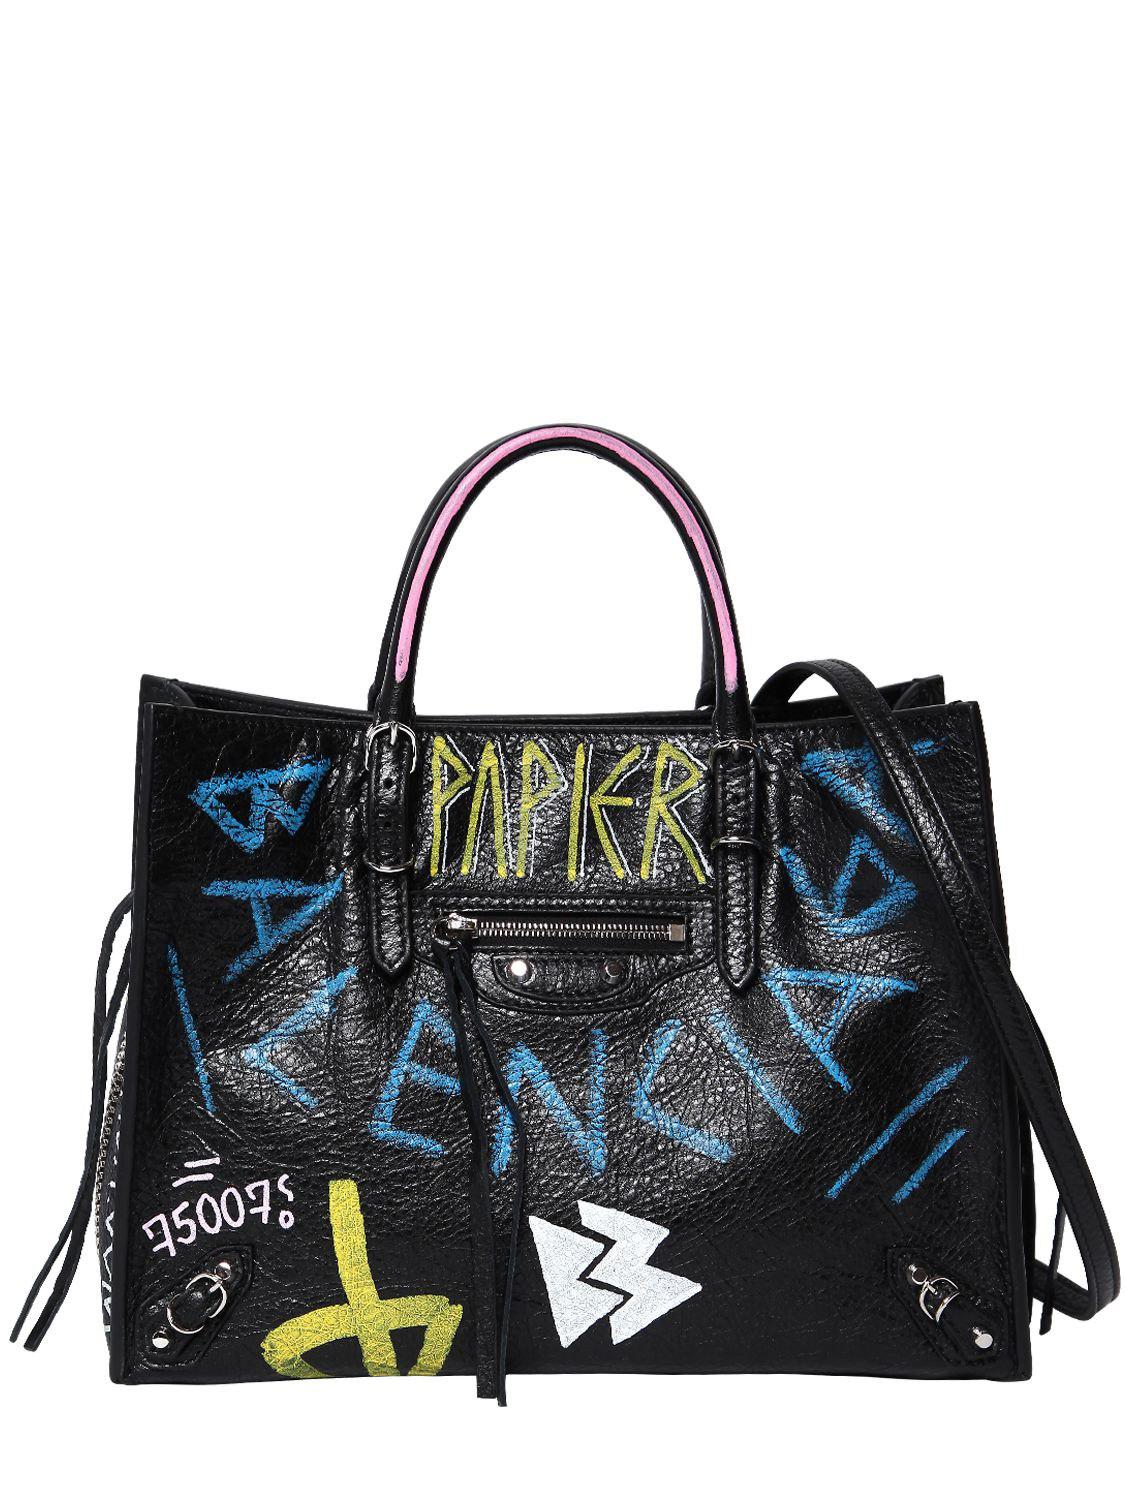 how to graffiti your handbag: balenciaga graffiti city bag DIY — Costen.